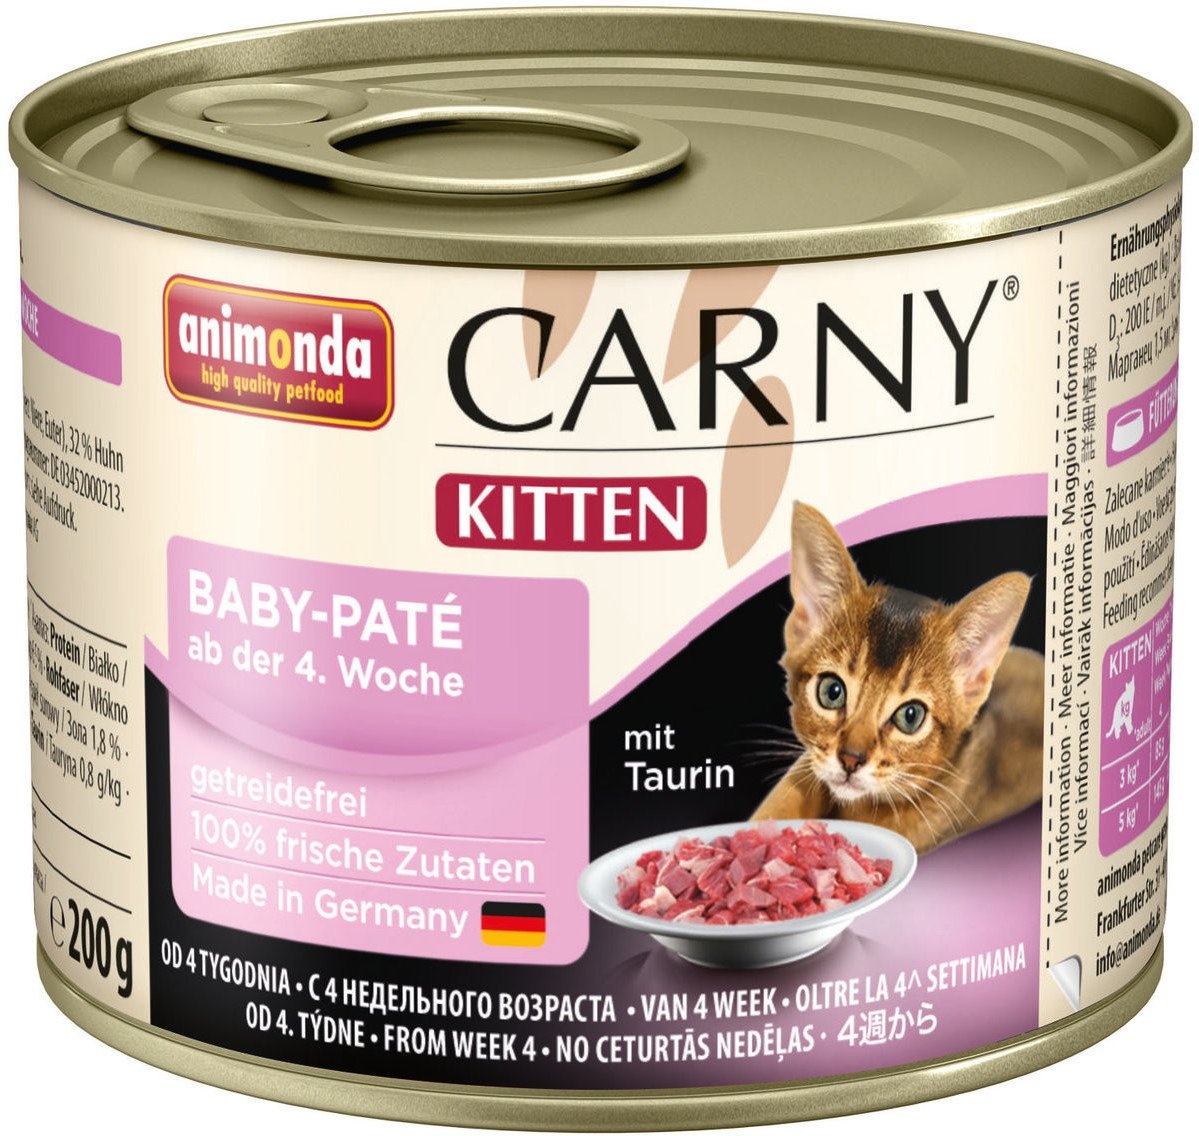 Animonda Cat Carny Kitten Baby Pate 12x200g (Rabatt für Stammkunden 3%)